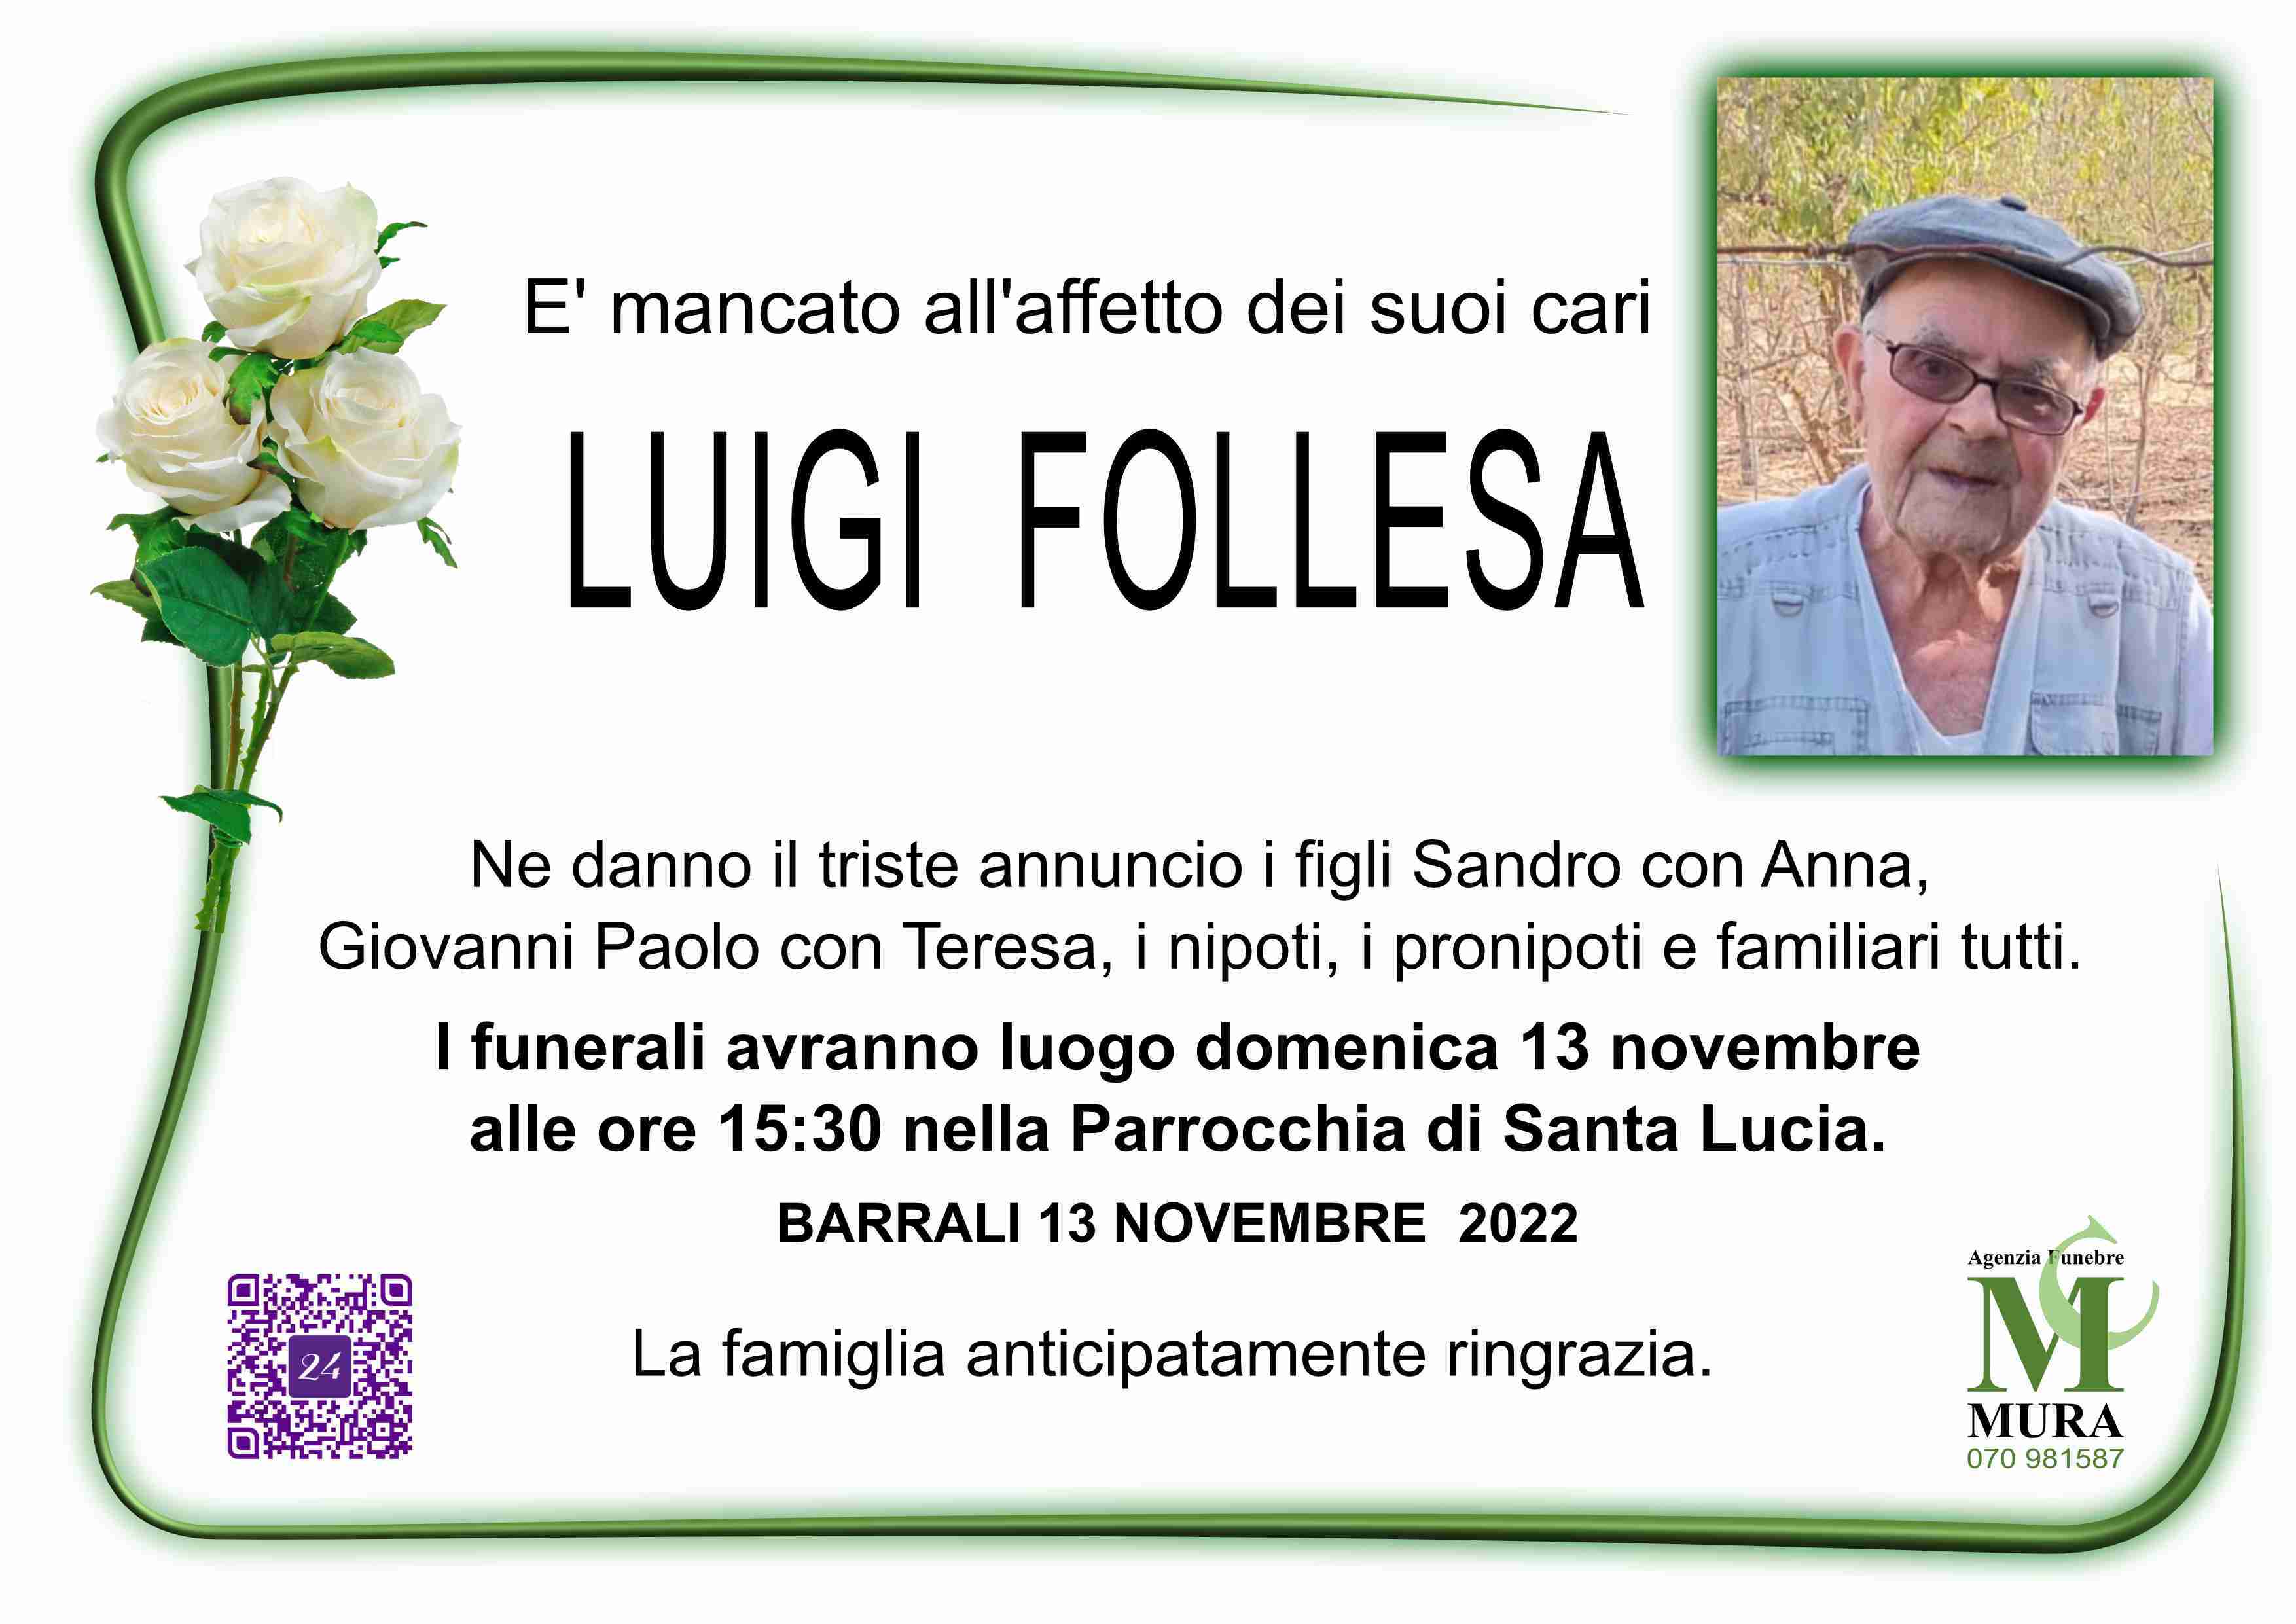 Luigi Follesa